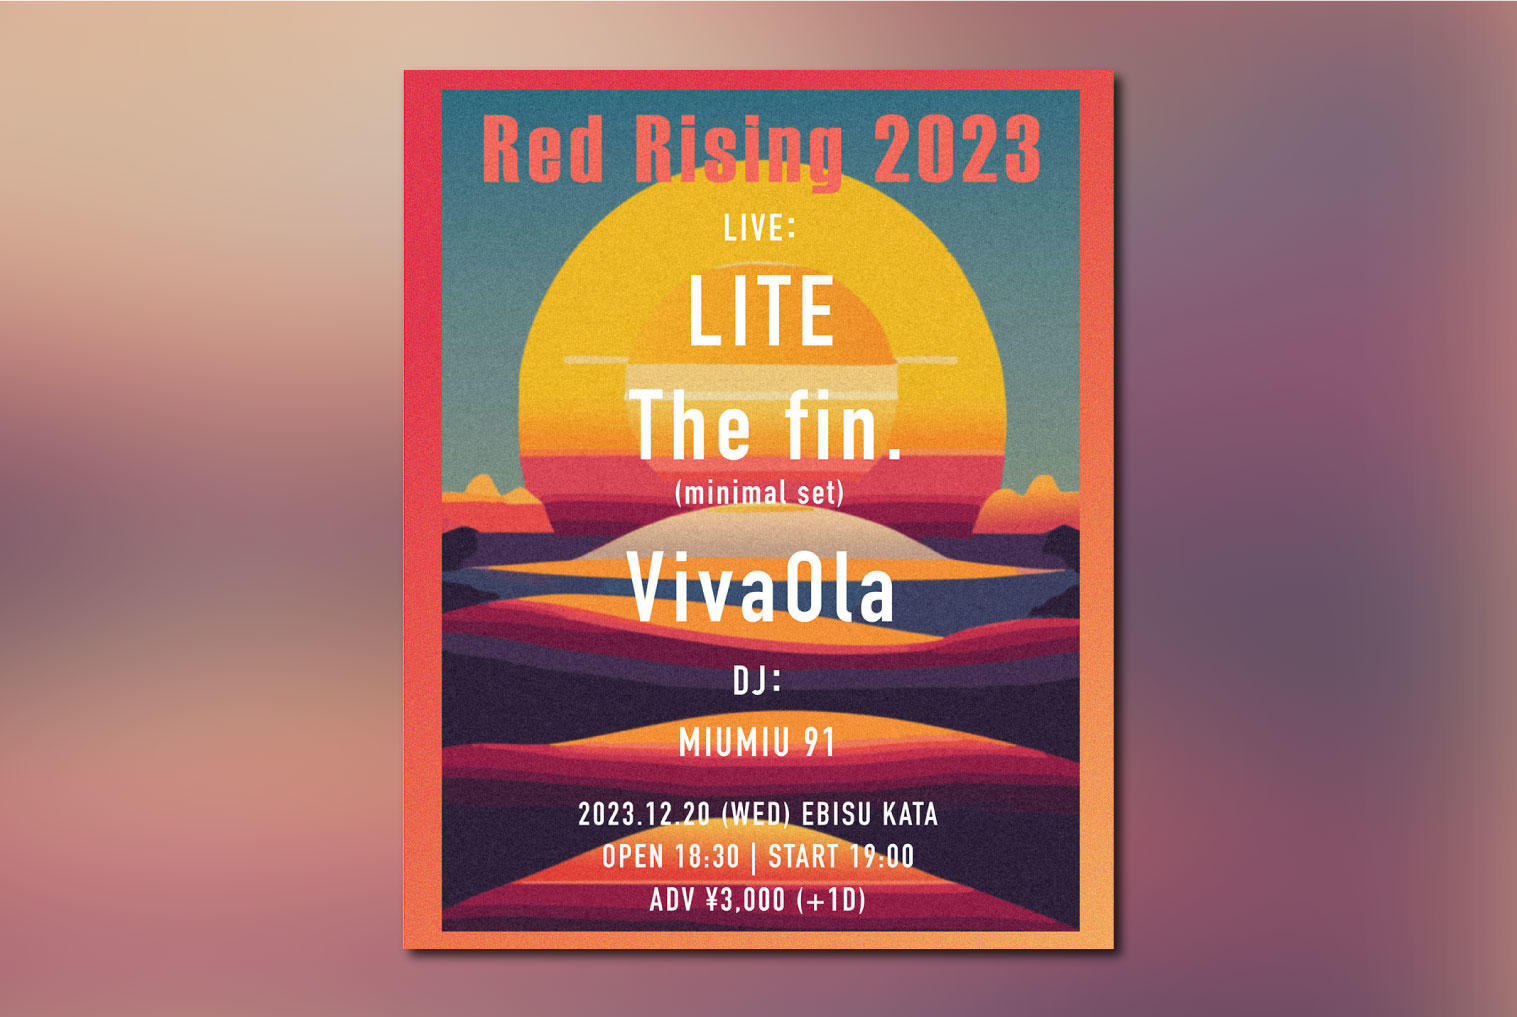 LITE・The fin.(minimal set)・VivaOlaの3組が出演する「RedRising 2023」、開催！